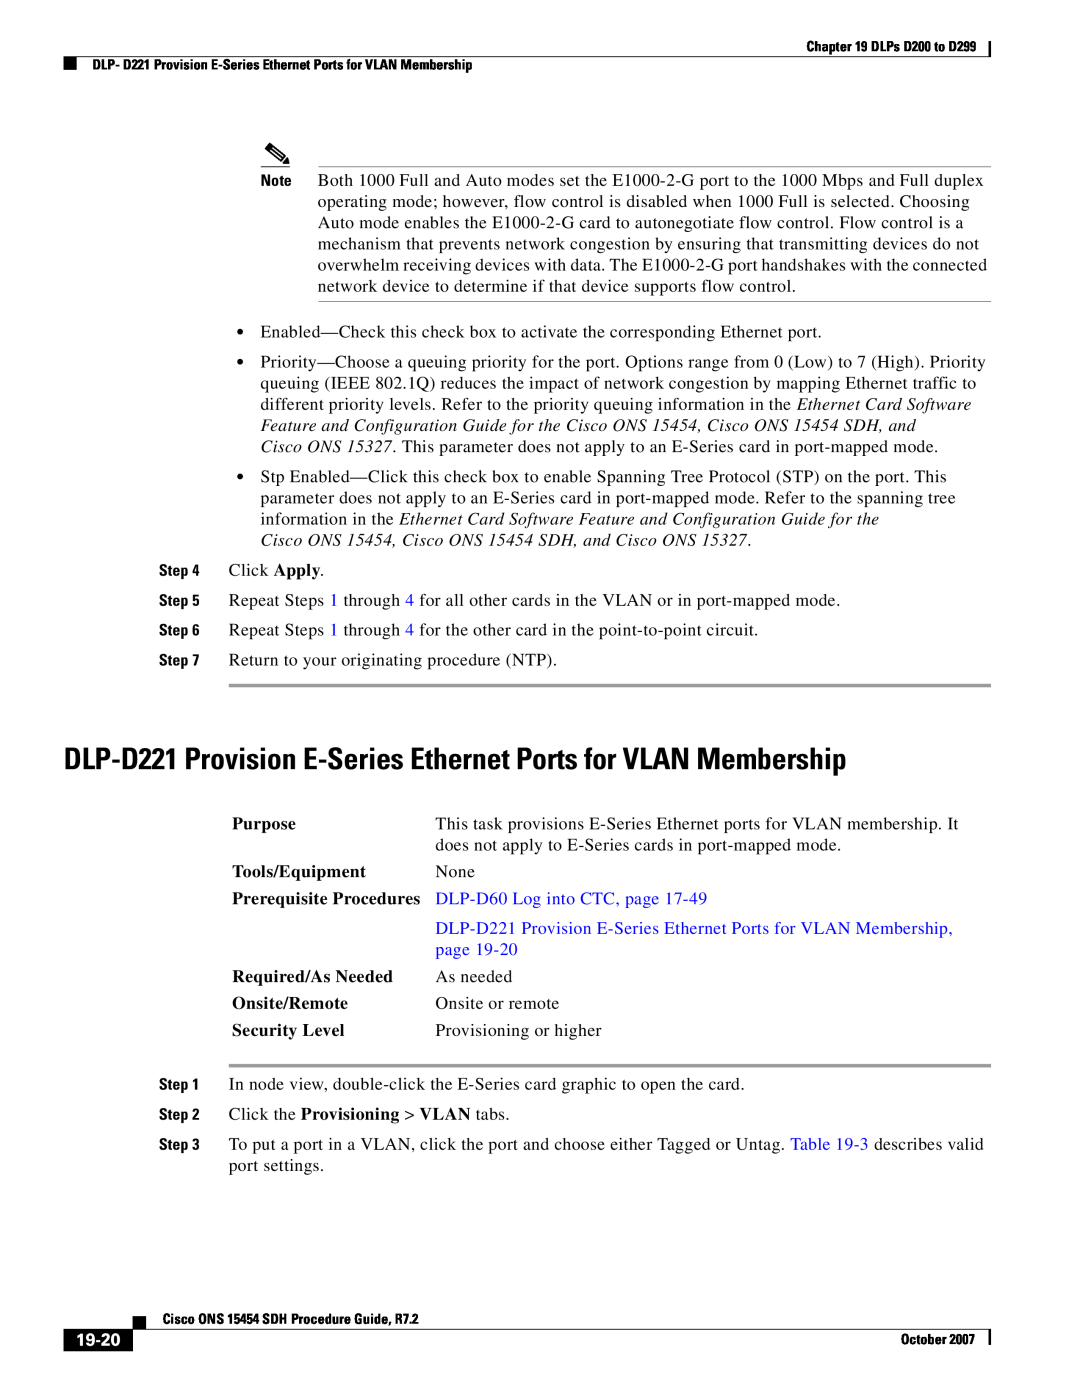 Cisco Systems D200 DLP-D221 Provision E-Series Ethernet Ports for VLAN Membership, 19-20, DLP-D60 Log into CTC, page 